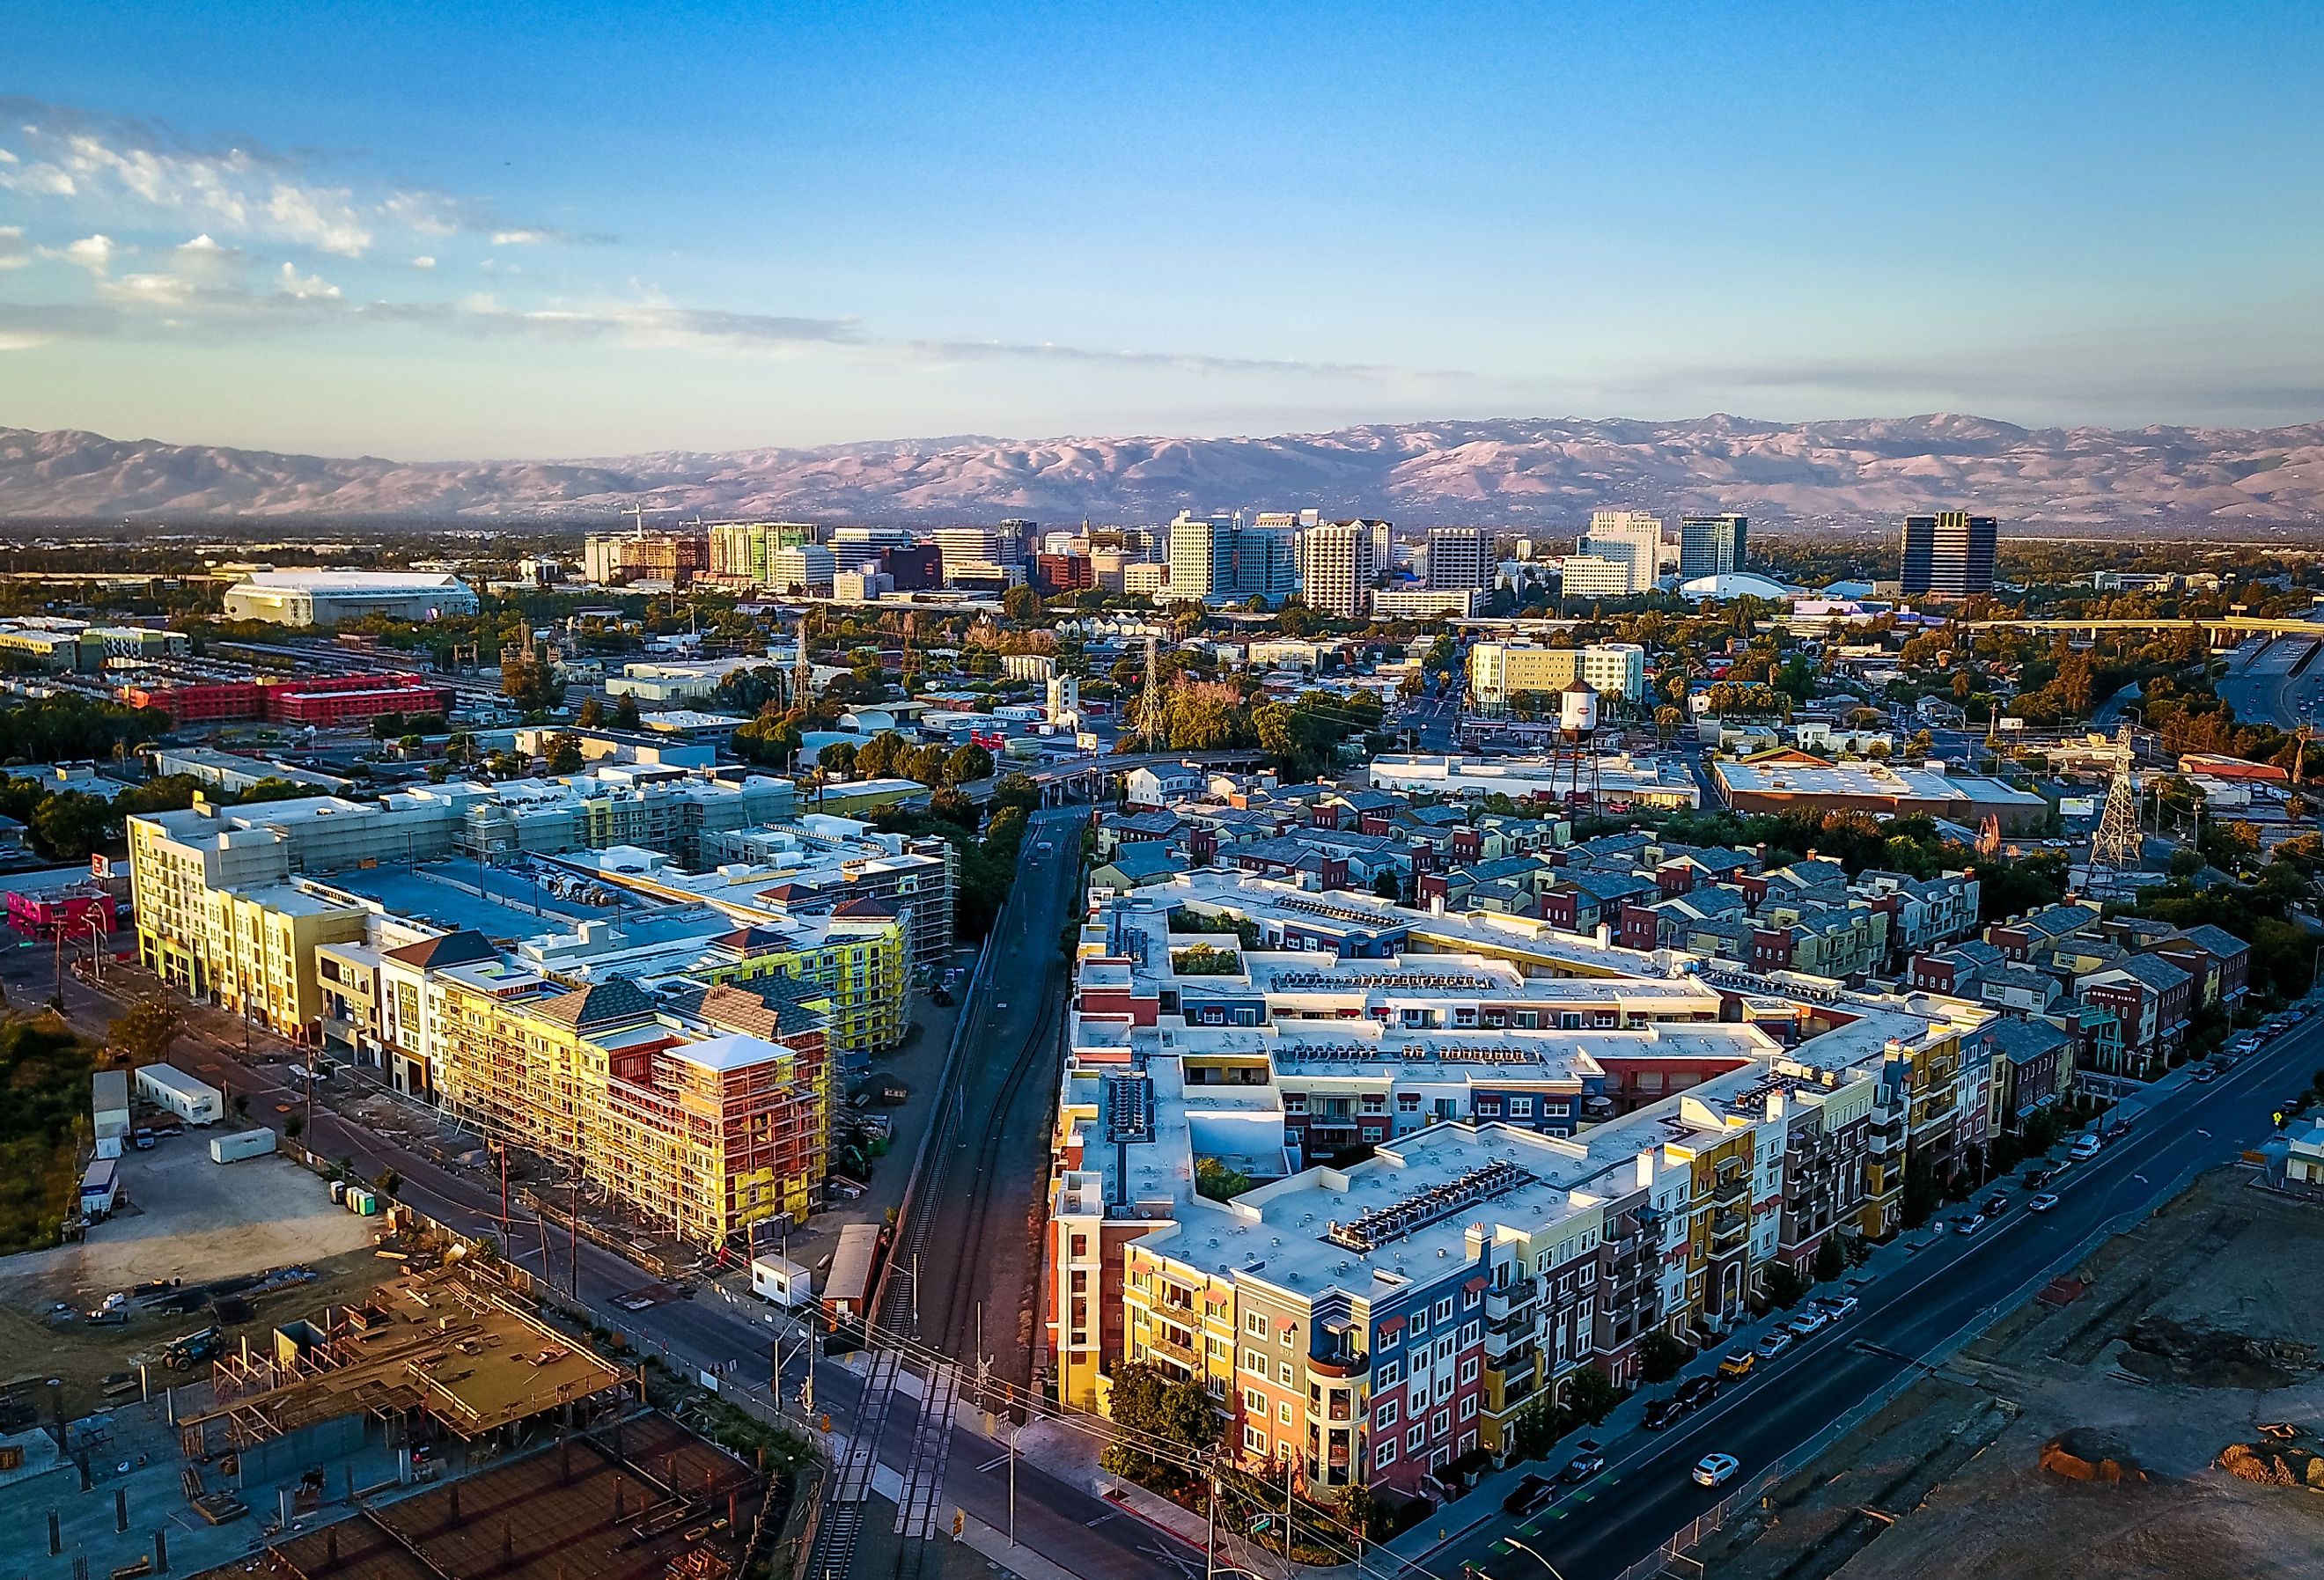 Aerial view of San Jose, California. Image credit Uladzik Kryhin via Shutterstock